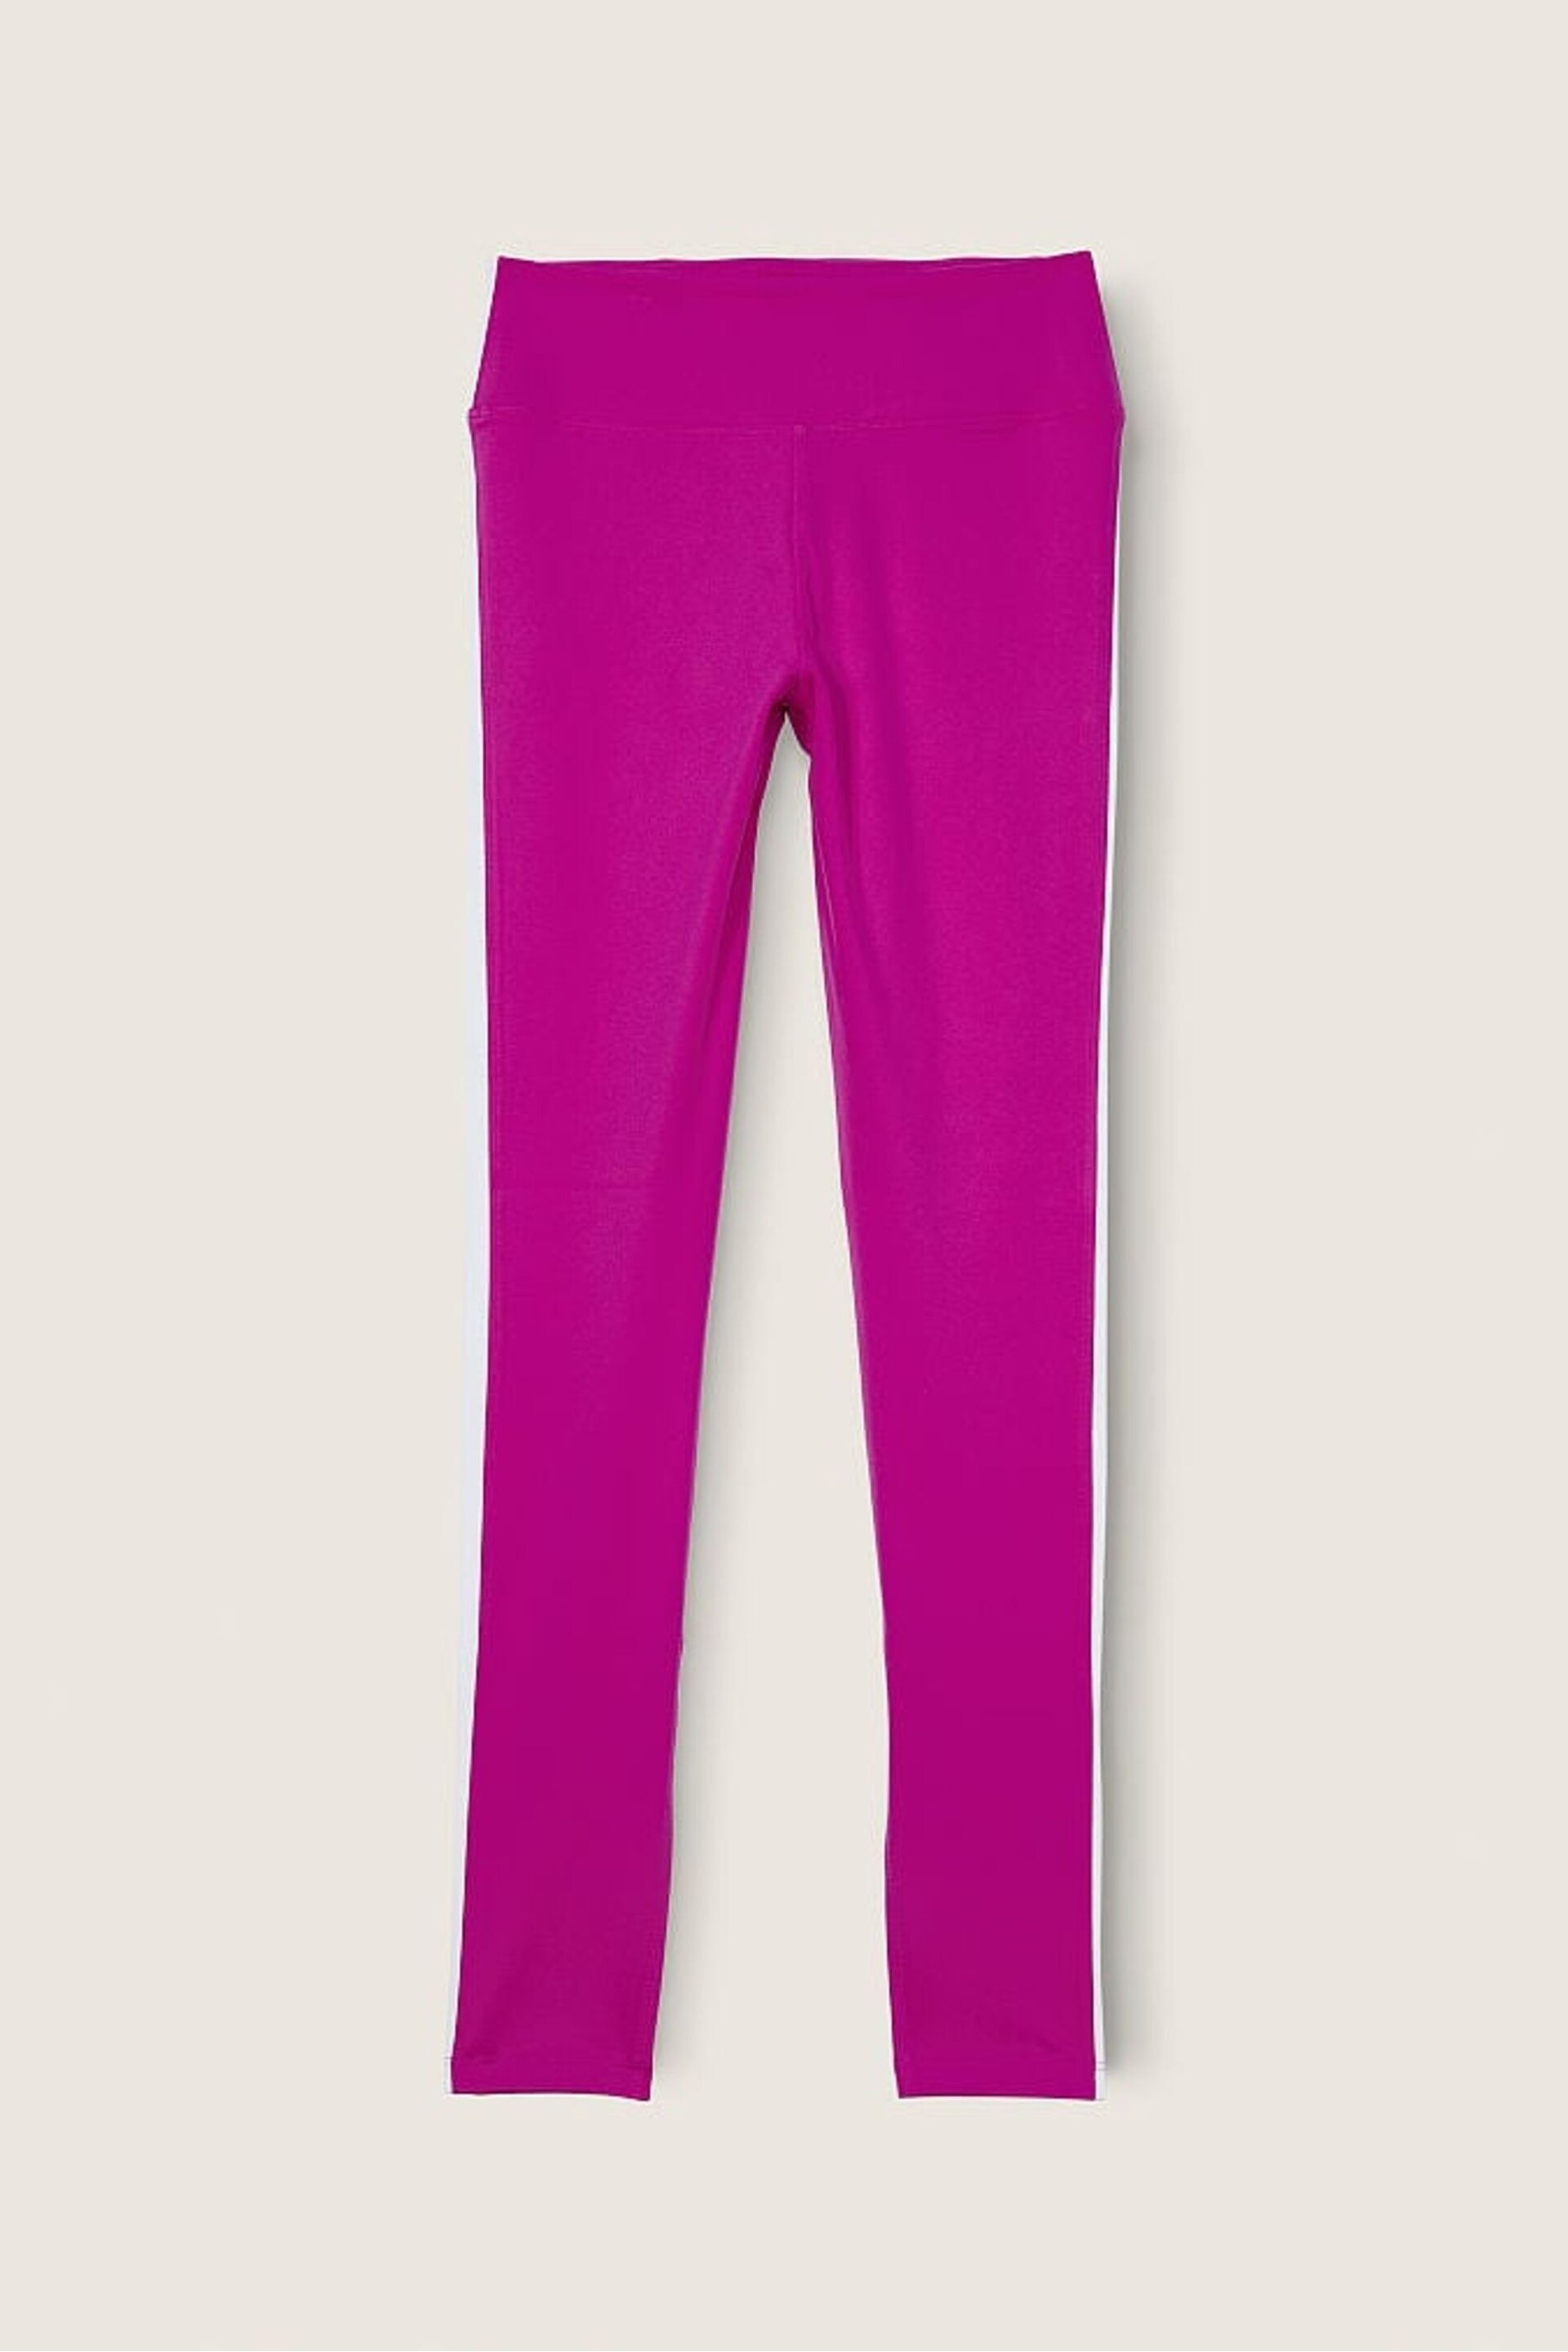 Victoria's Secret PINK Dahlia Magenta Pink Soft Ultimate High Waist Full Length Legging - Image 4 of 4